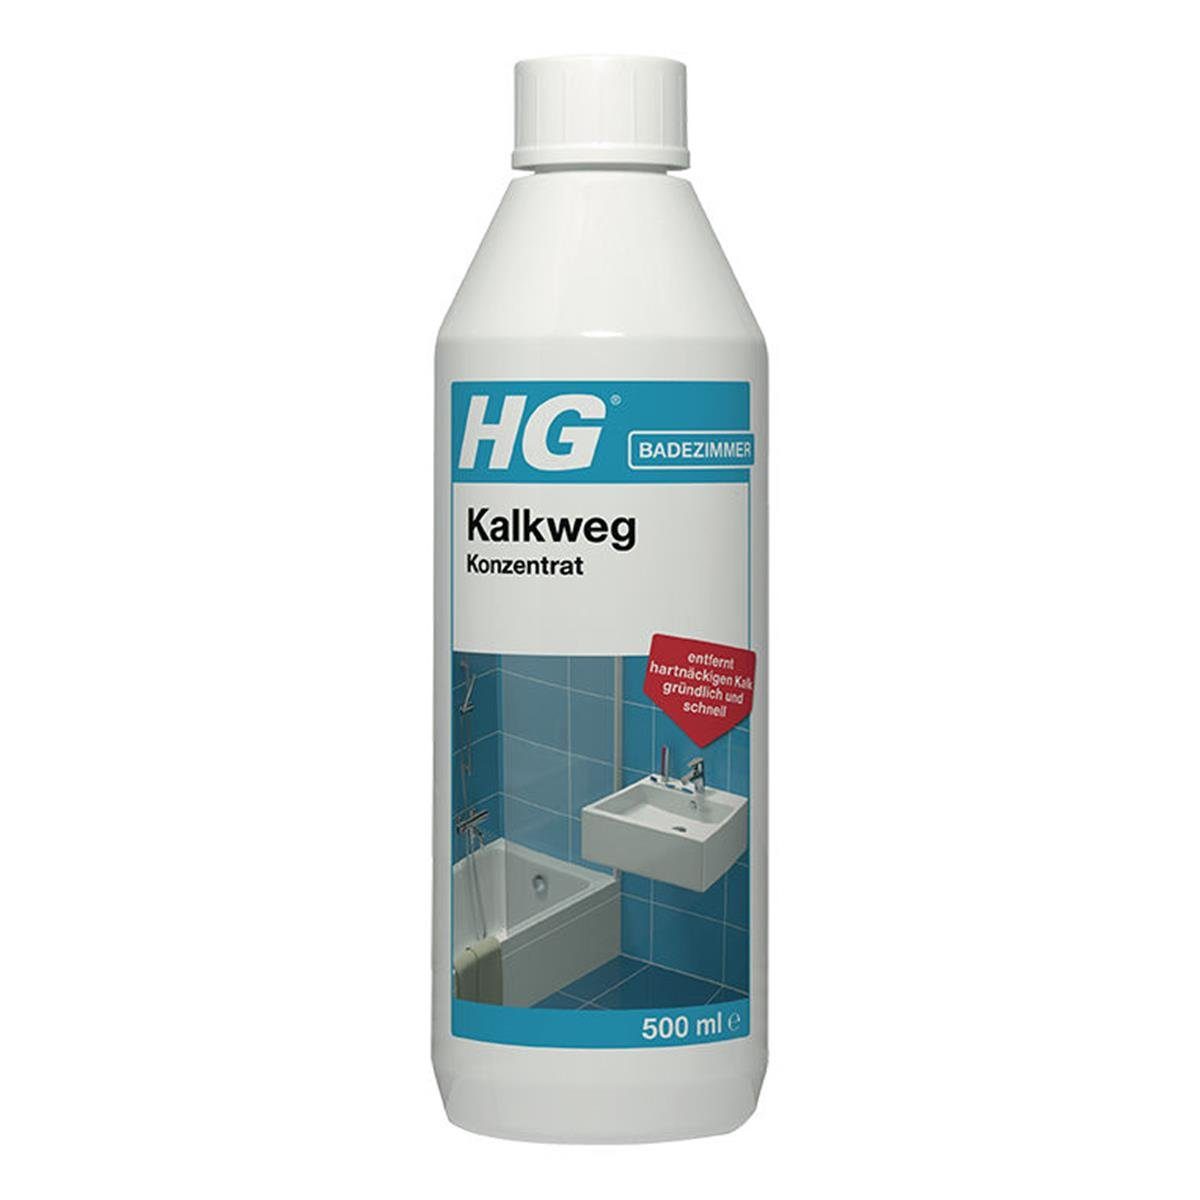 HG HG Kalkweg Konzentrat 500ml (1er Pack) Badreiniger